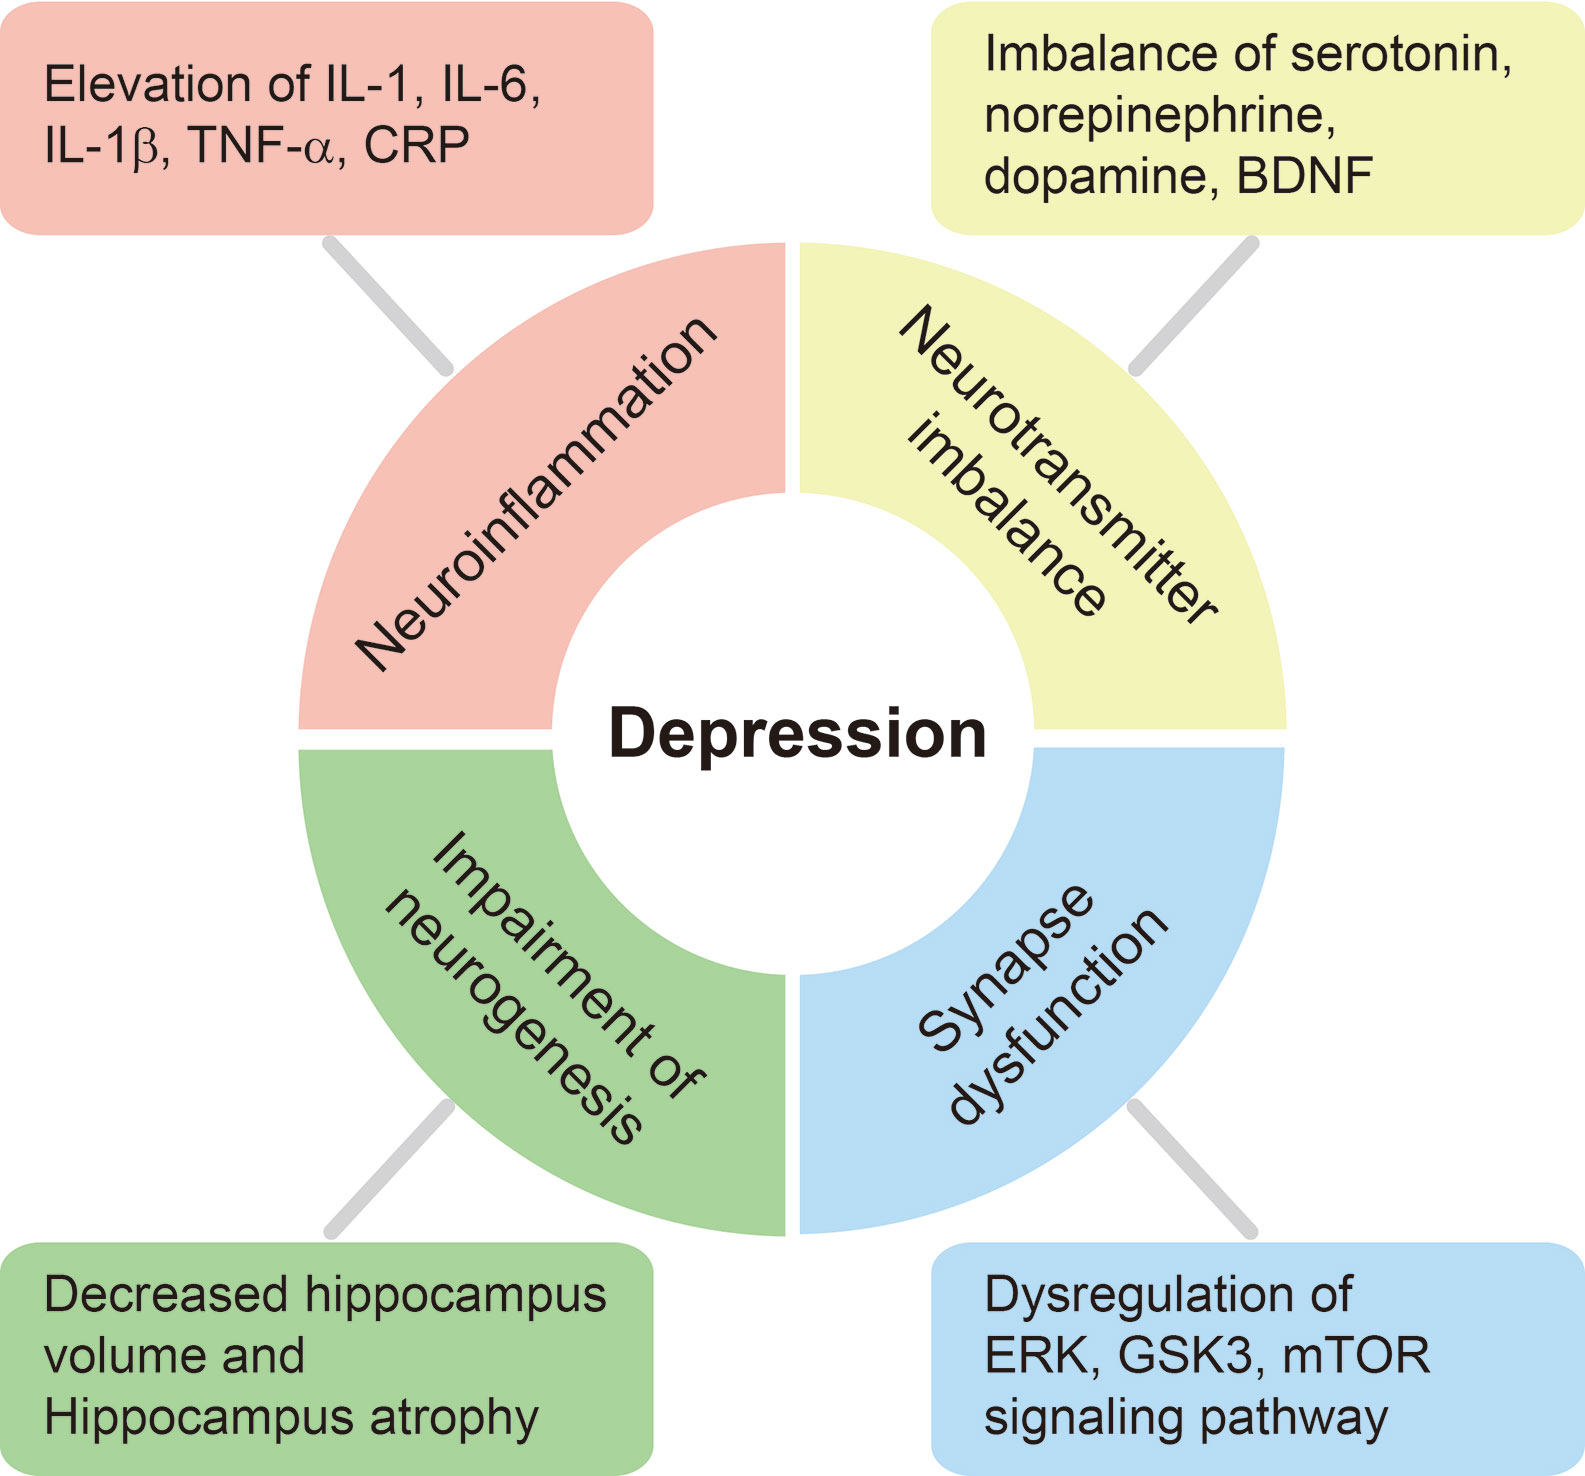 hypothesis of depression